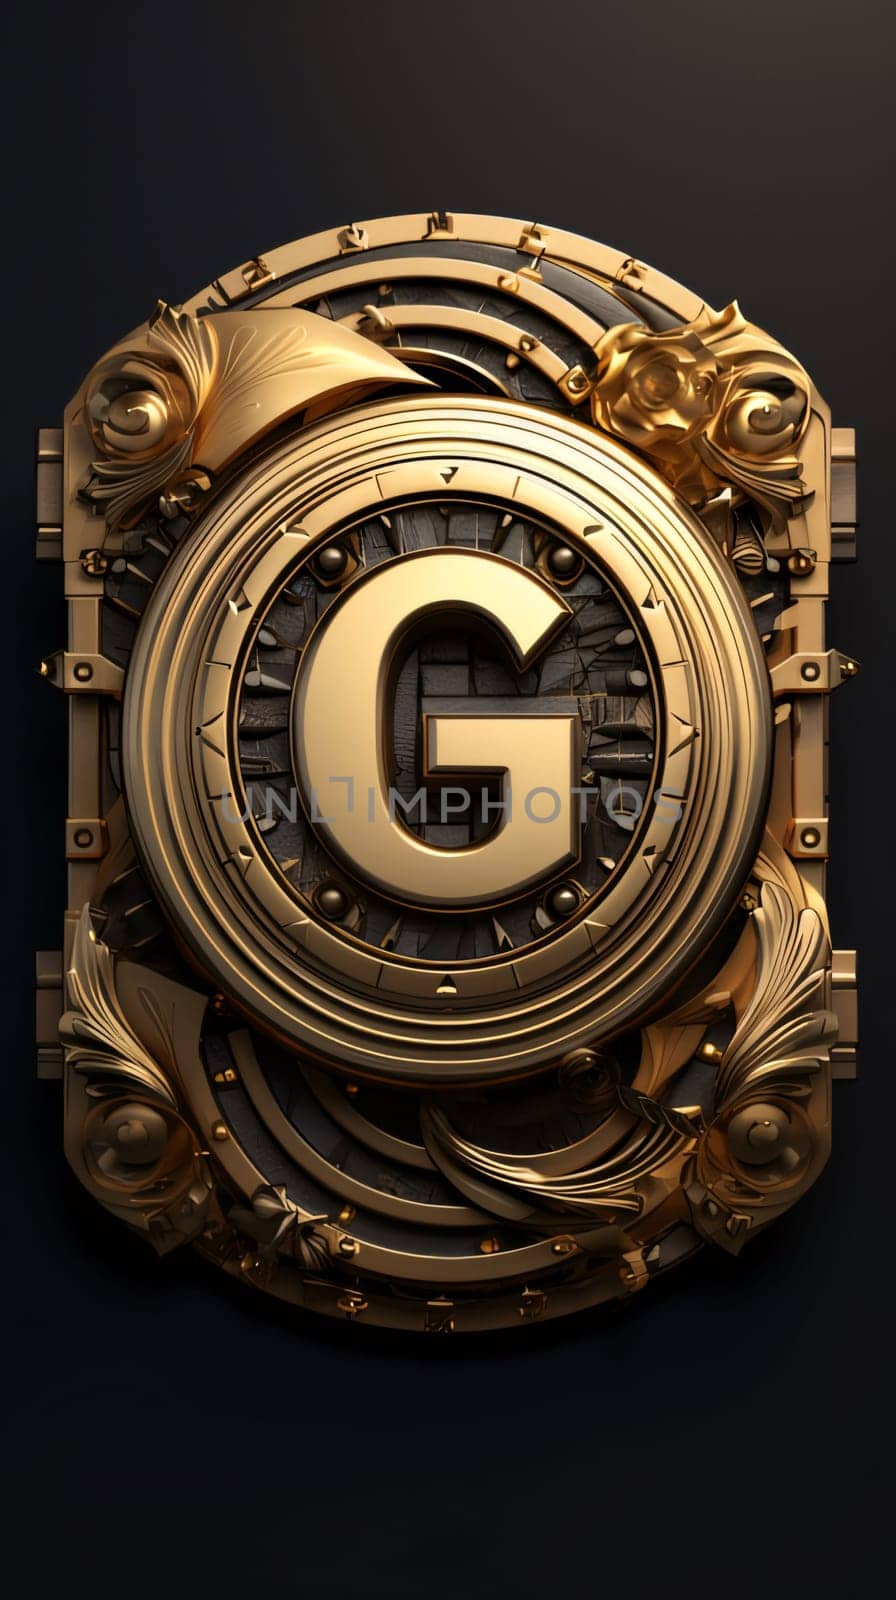 Graphic alphabet letters: Letter G in golden frame on black background. 3D rendering.